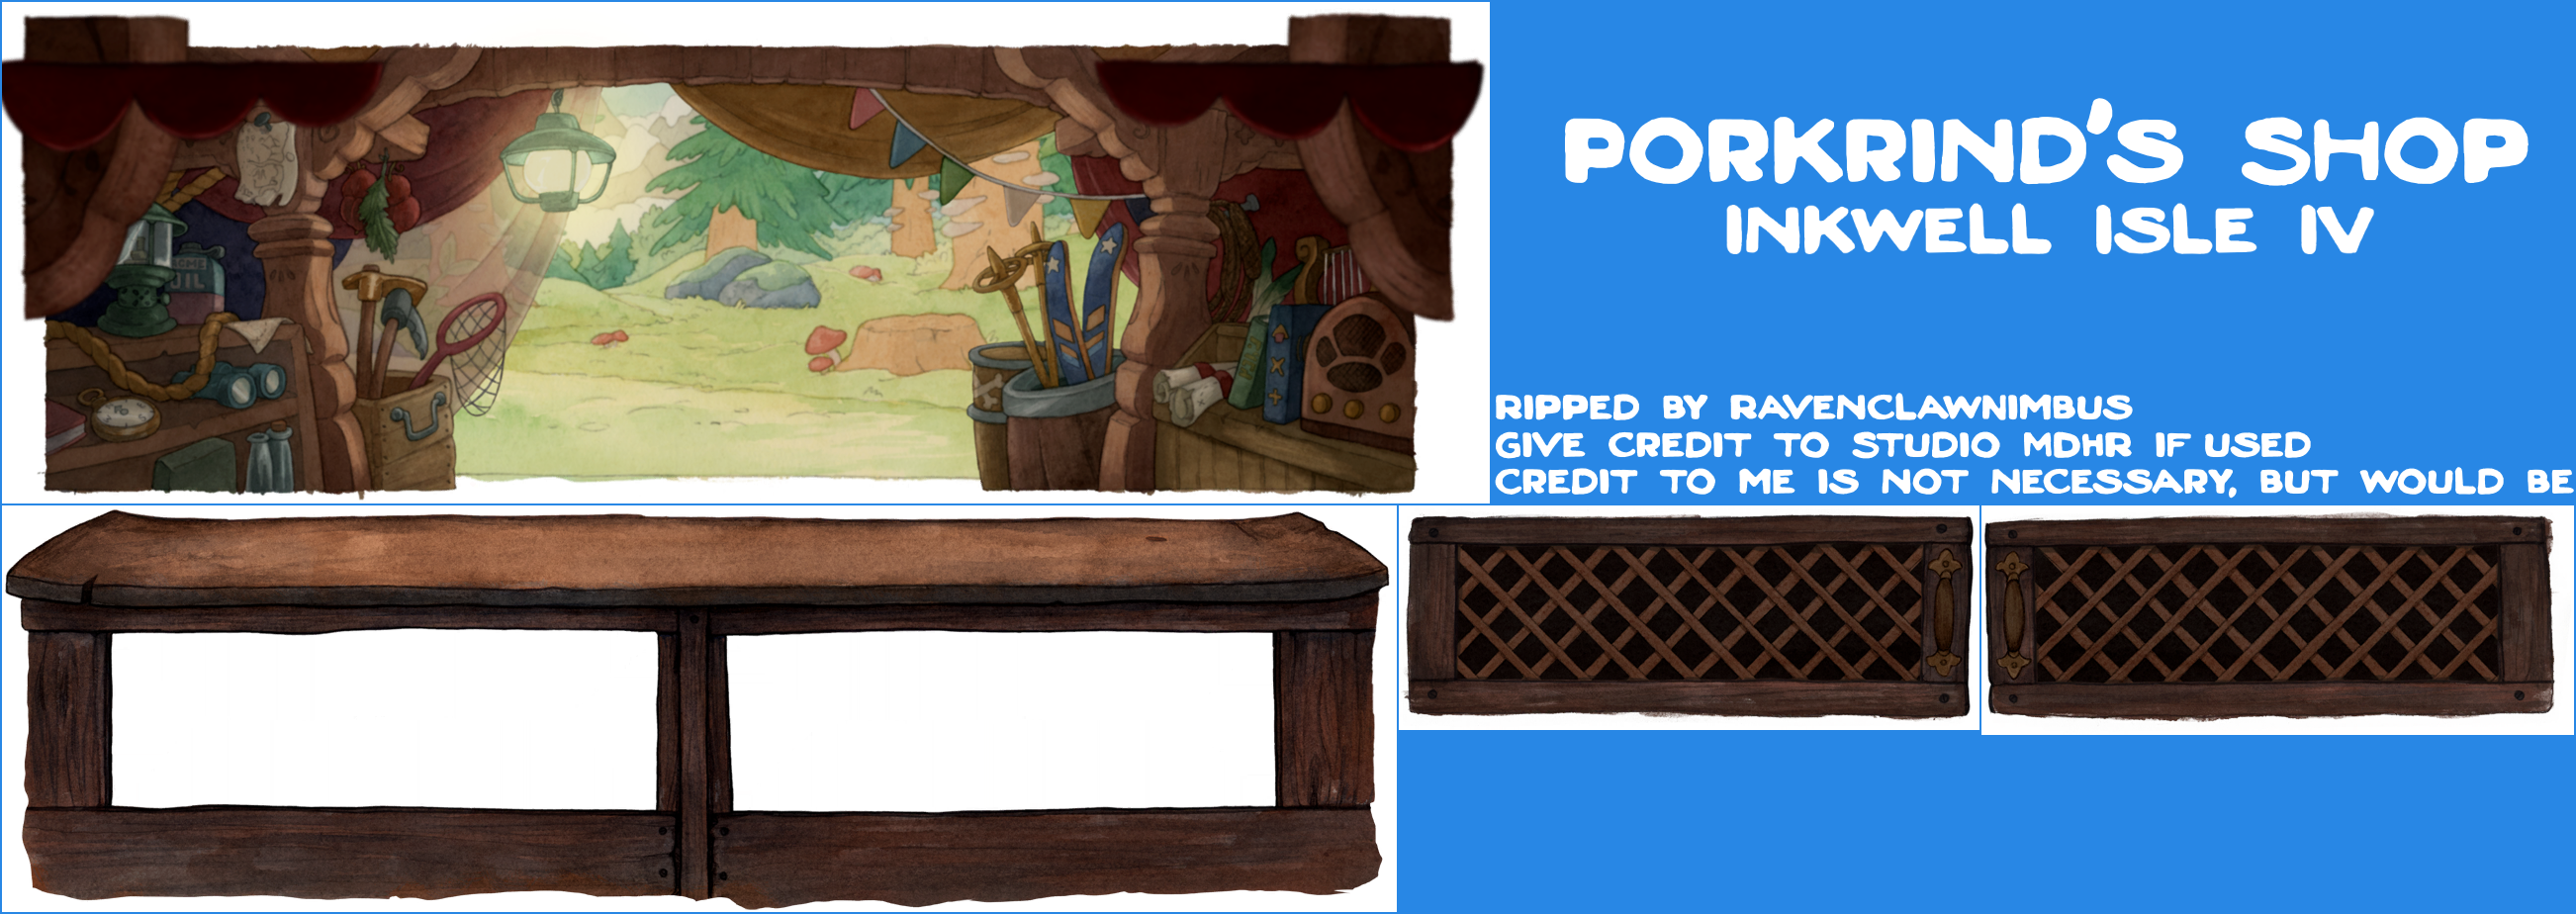 Porkrind's Shop (Isle 4)